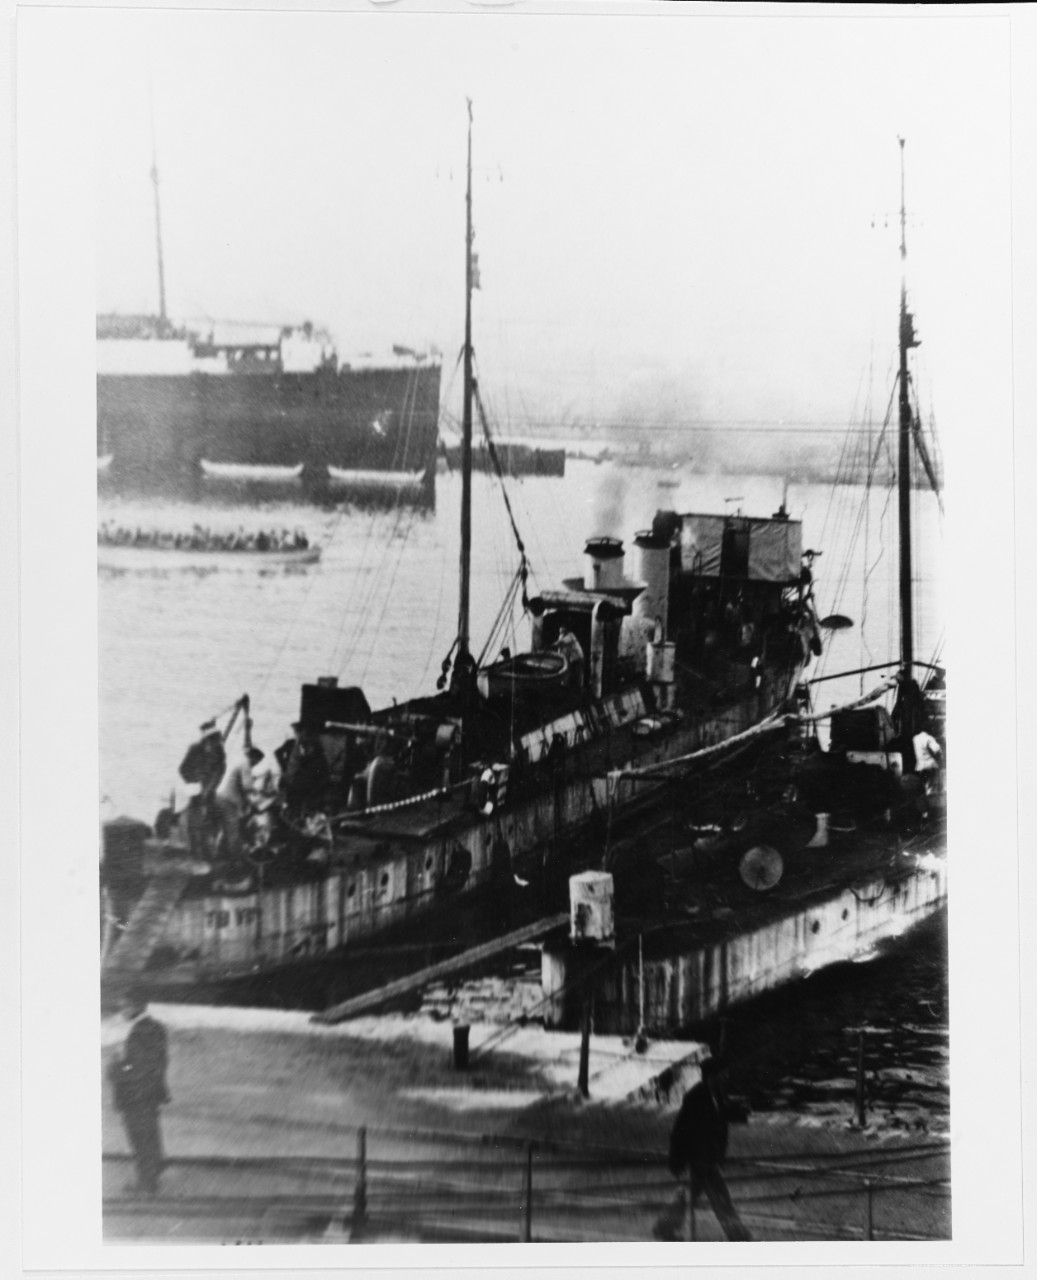 TB. VII (Austrian Torpedo Boat, 1909-1926)